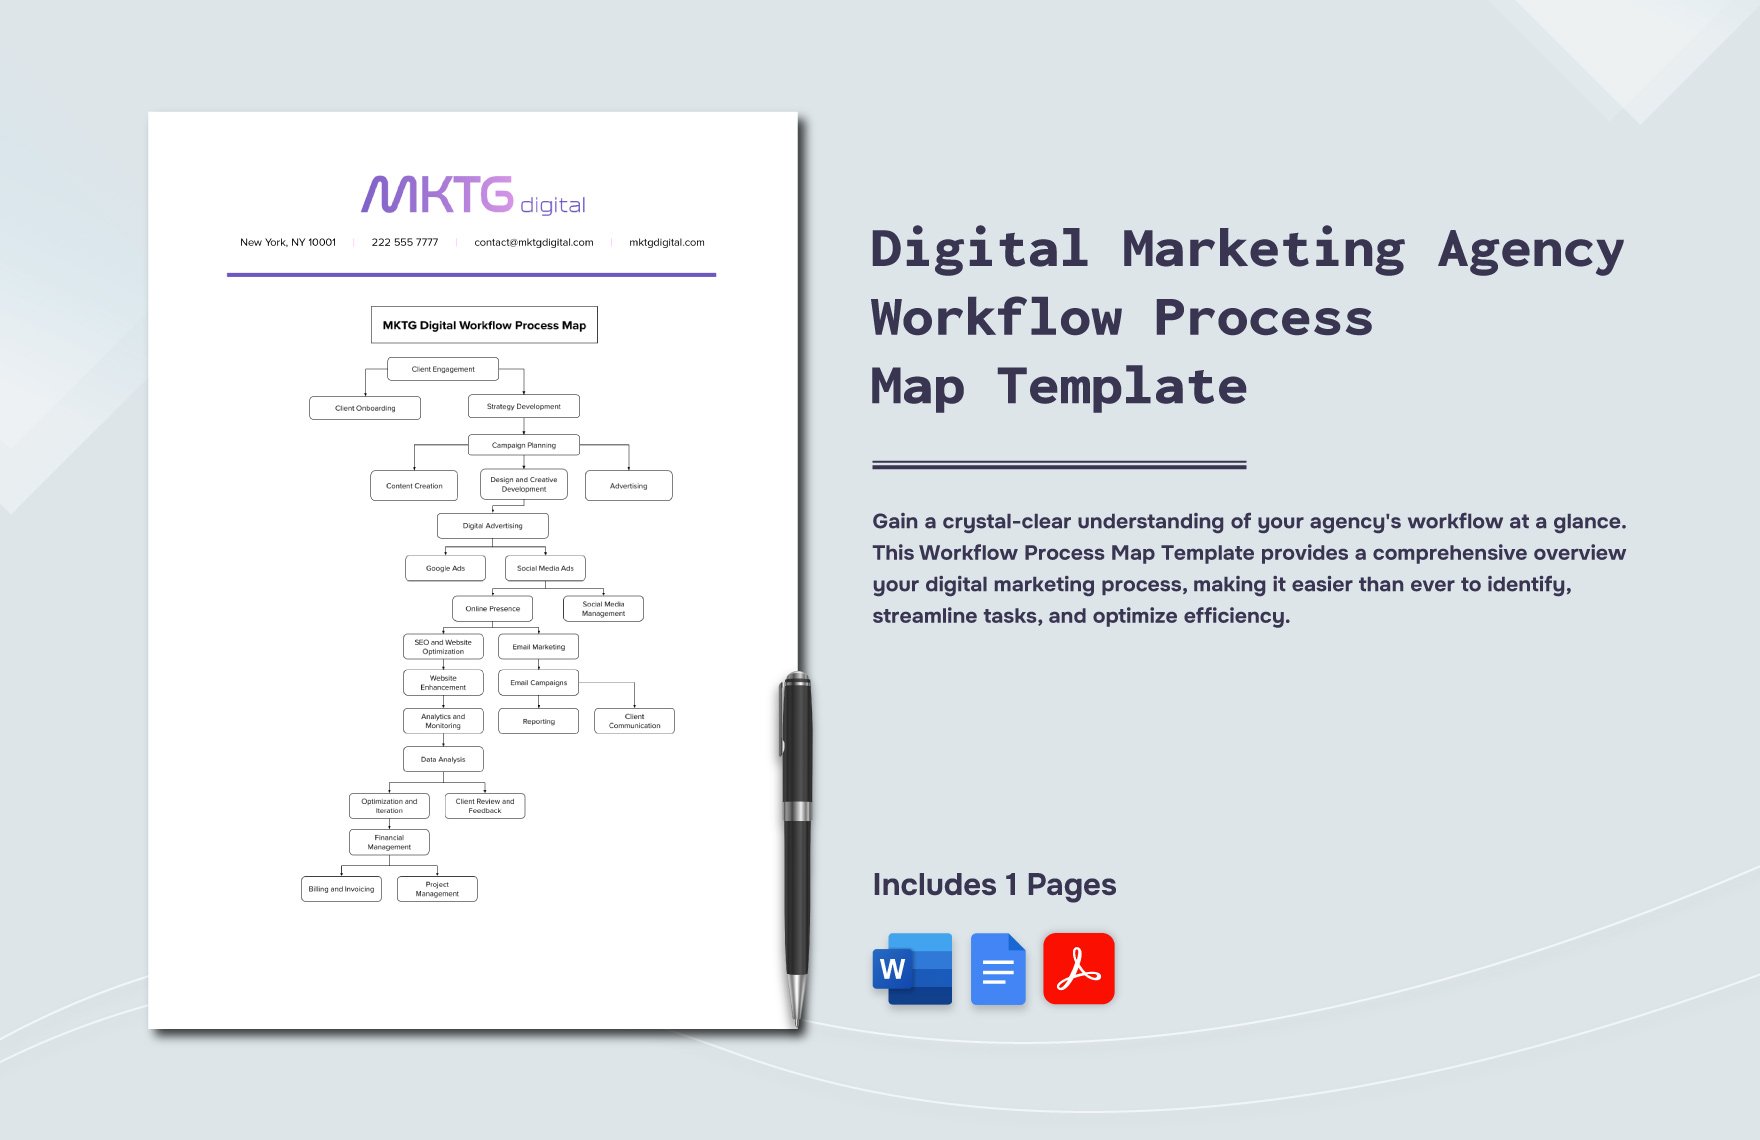 Digital Marketing Agency Workflow Process Map Template